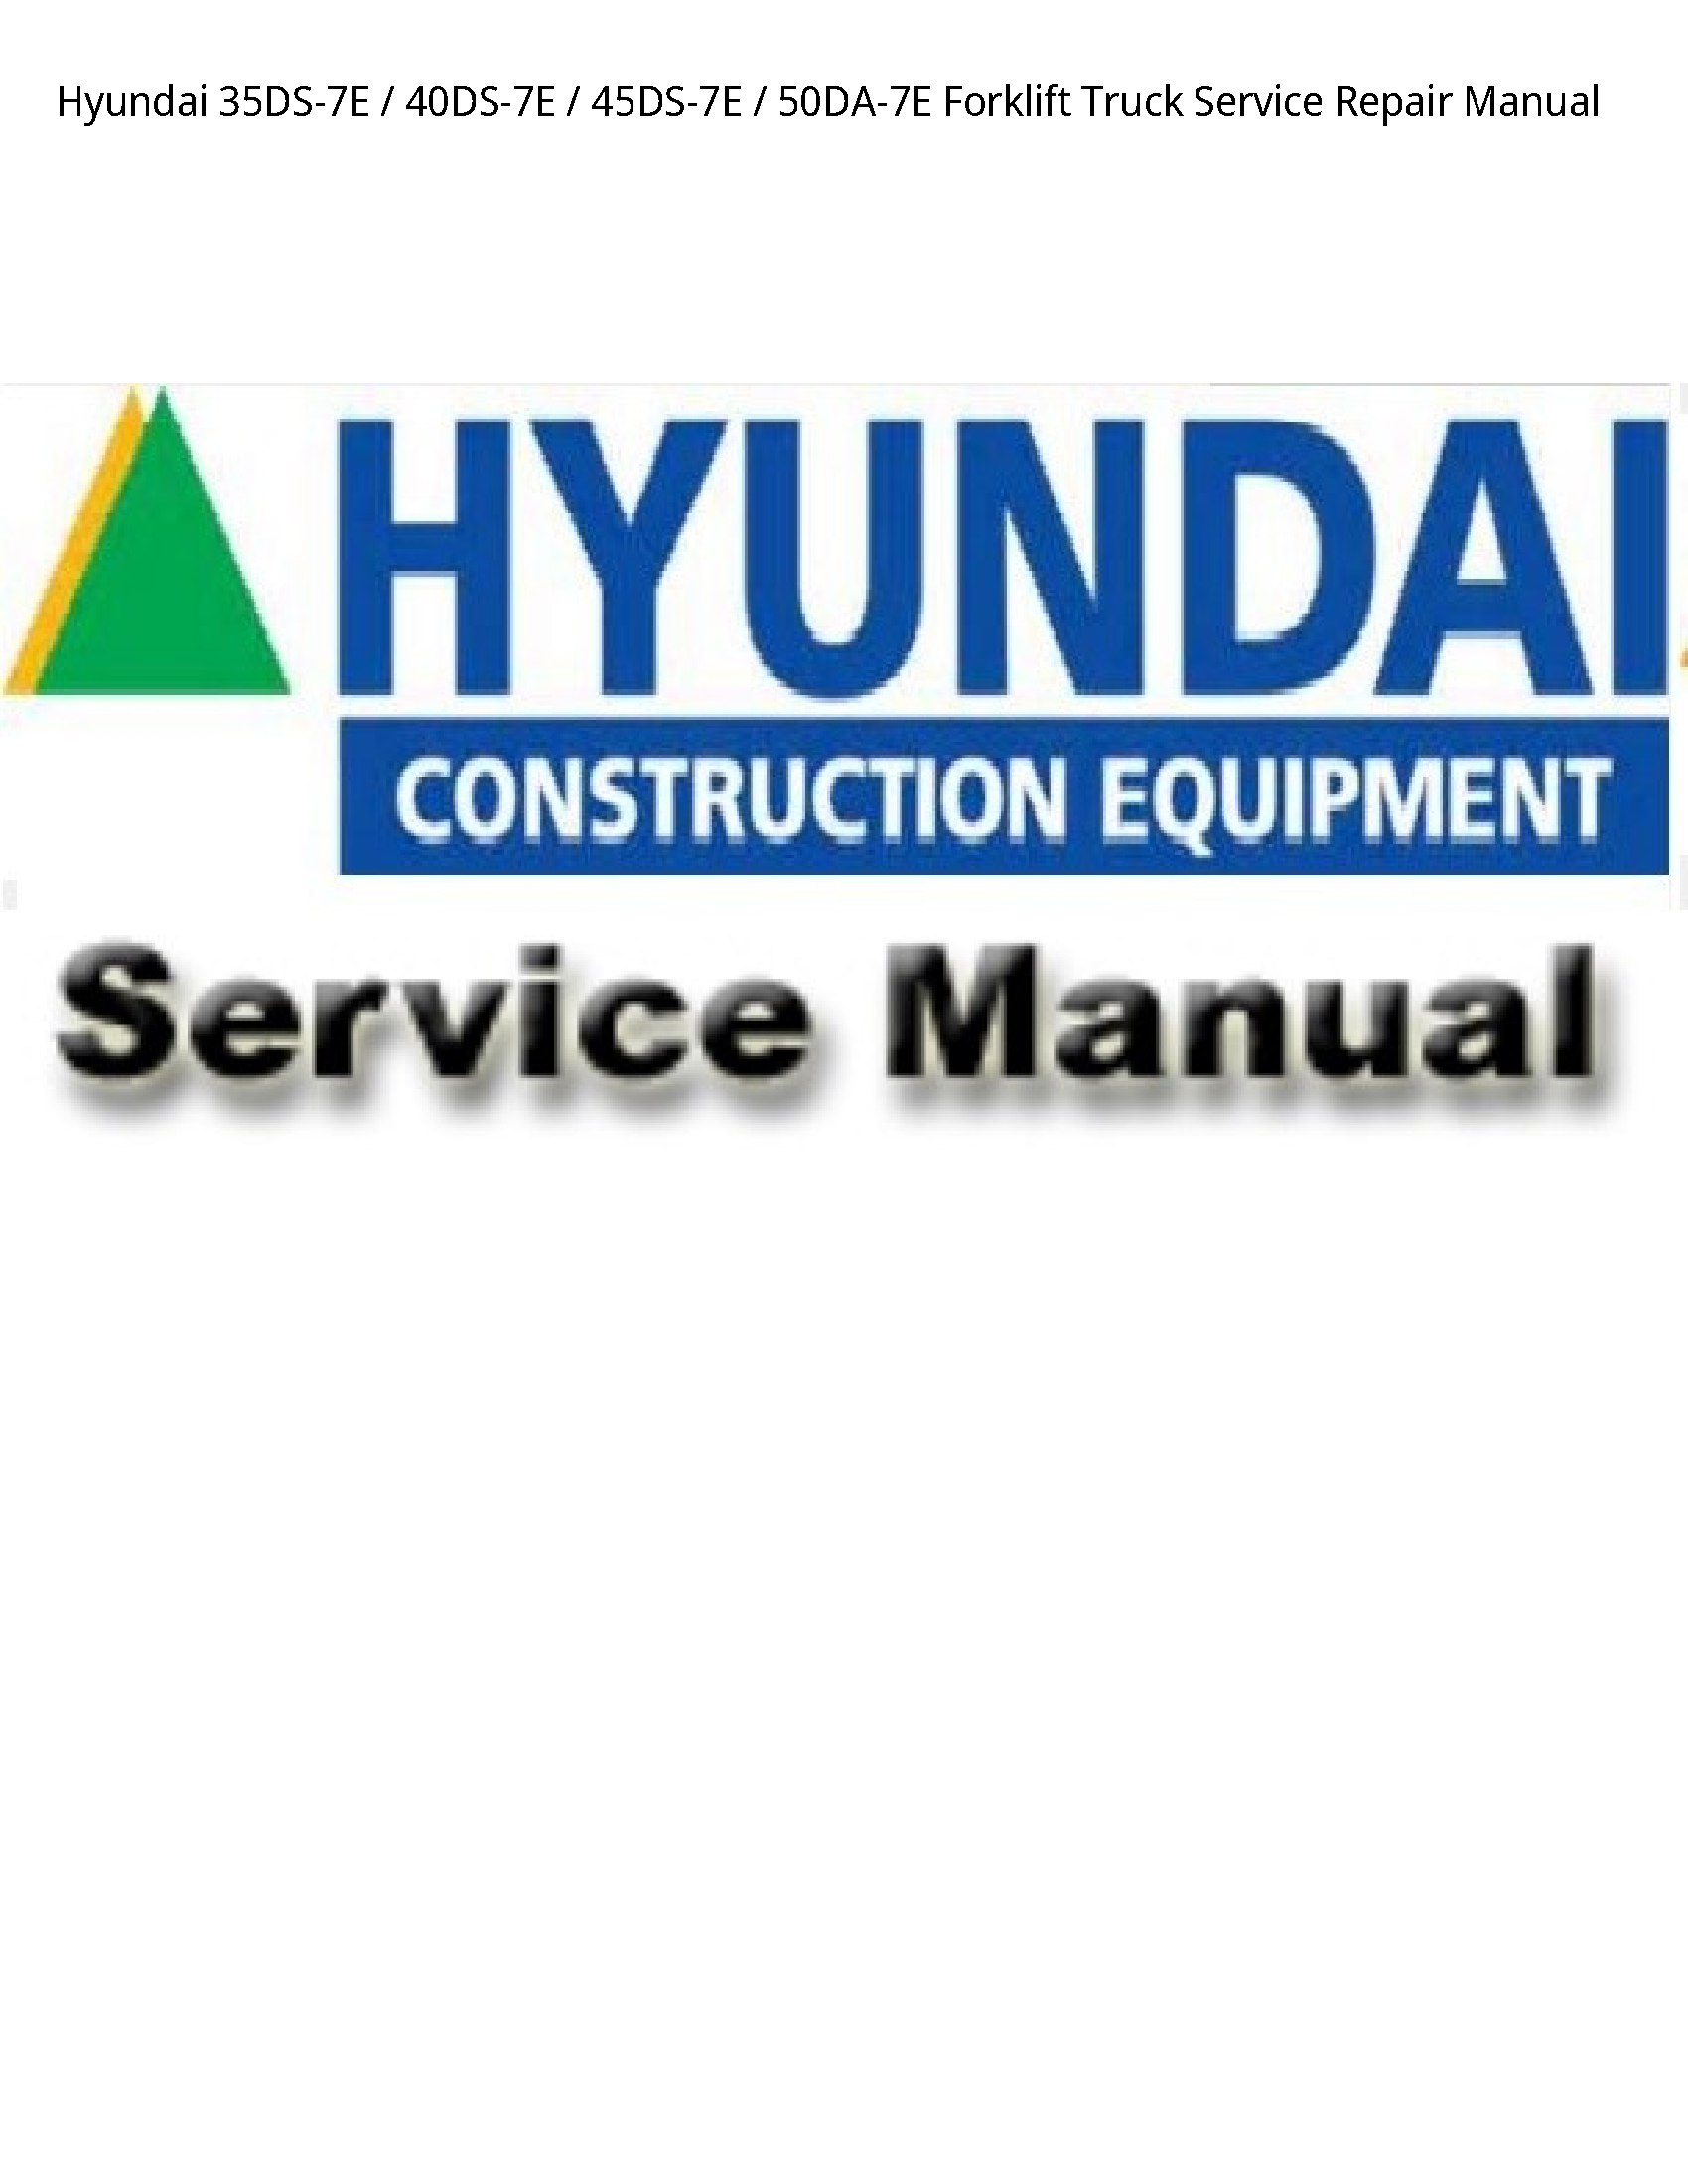 Hyundai 35DS-7E Forklift Truck manual